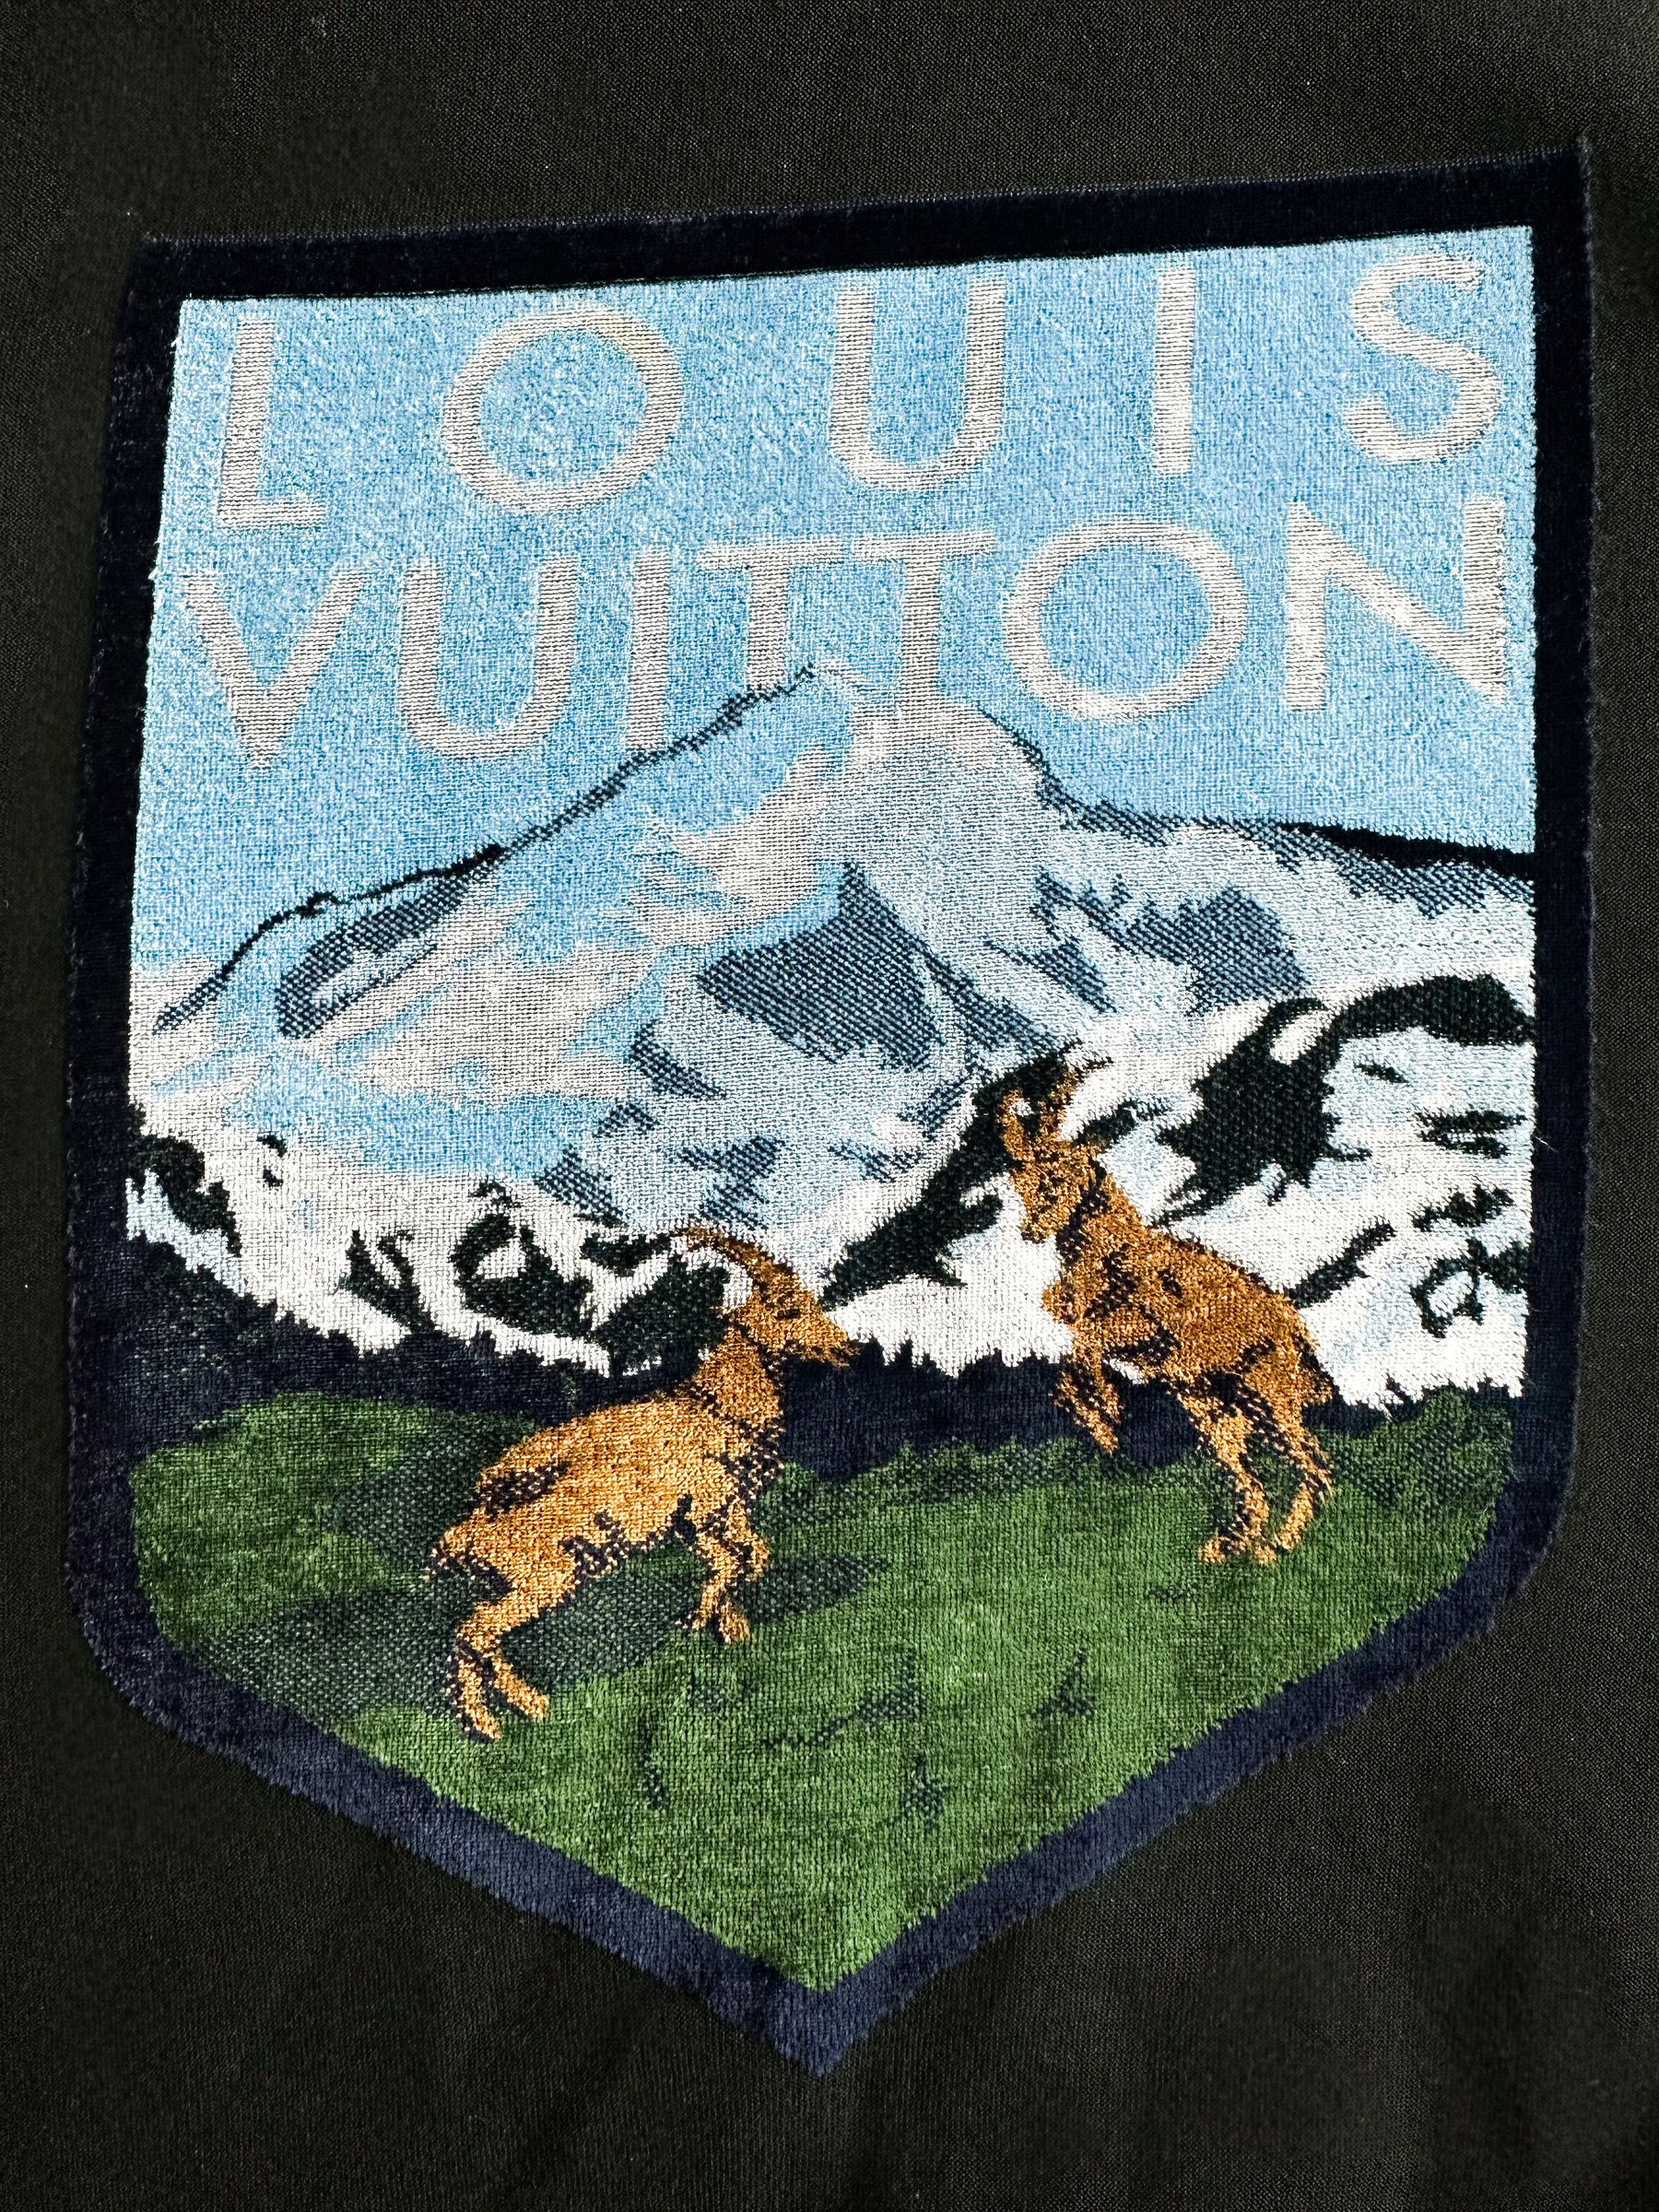 Louis Vuitton Black National Park Print Sweater